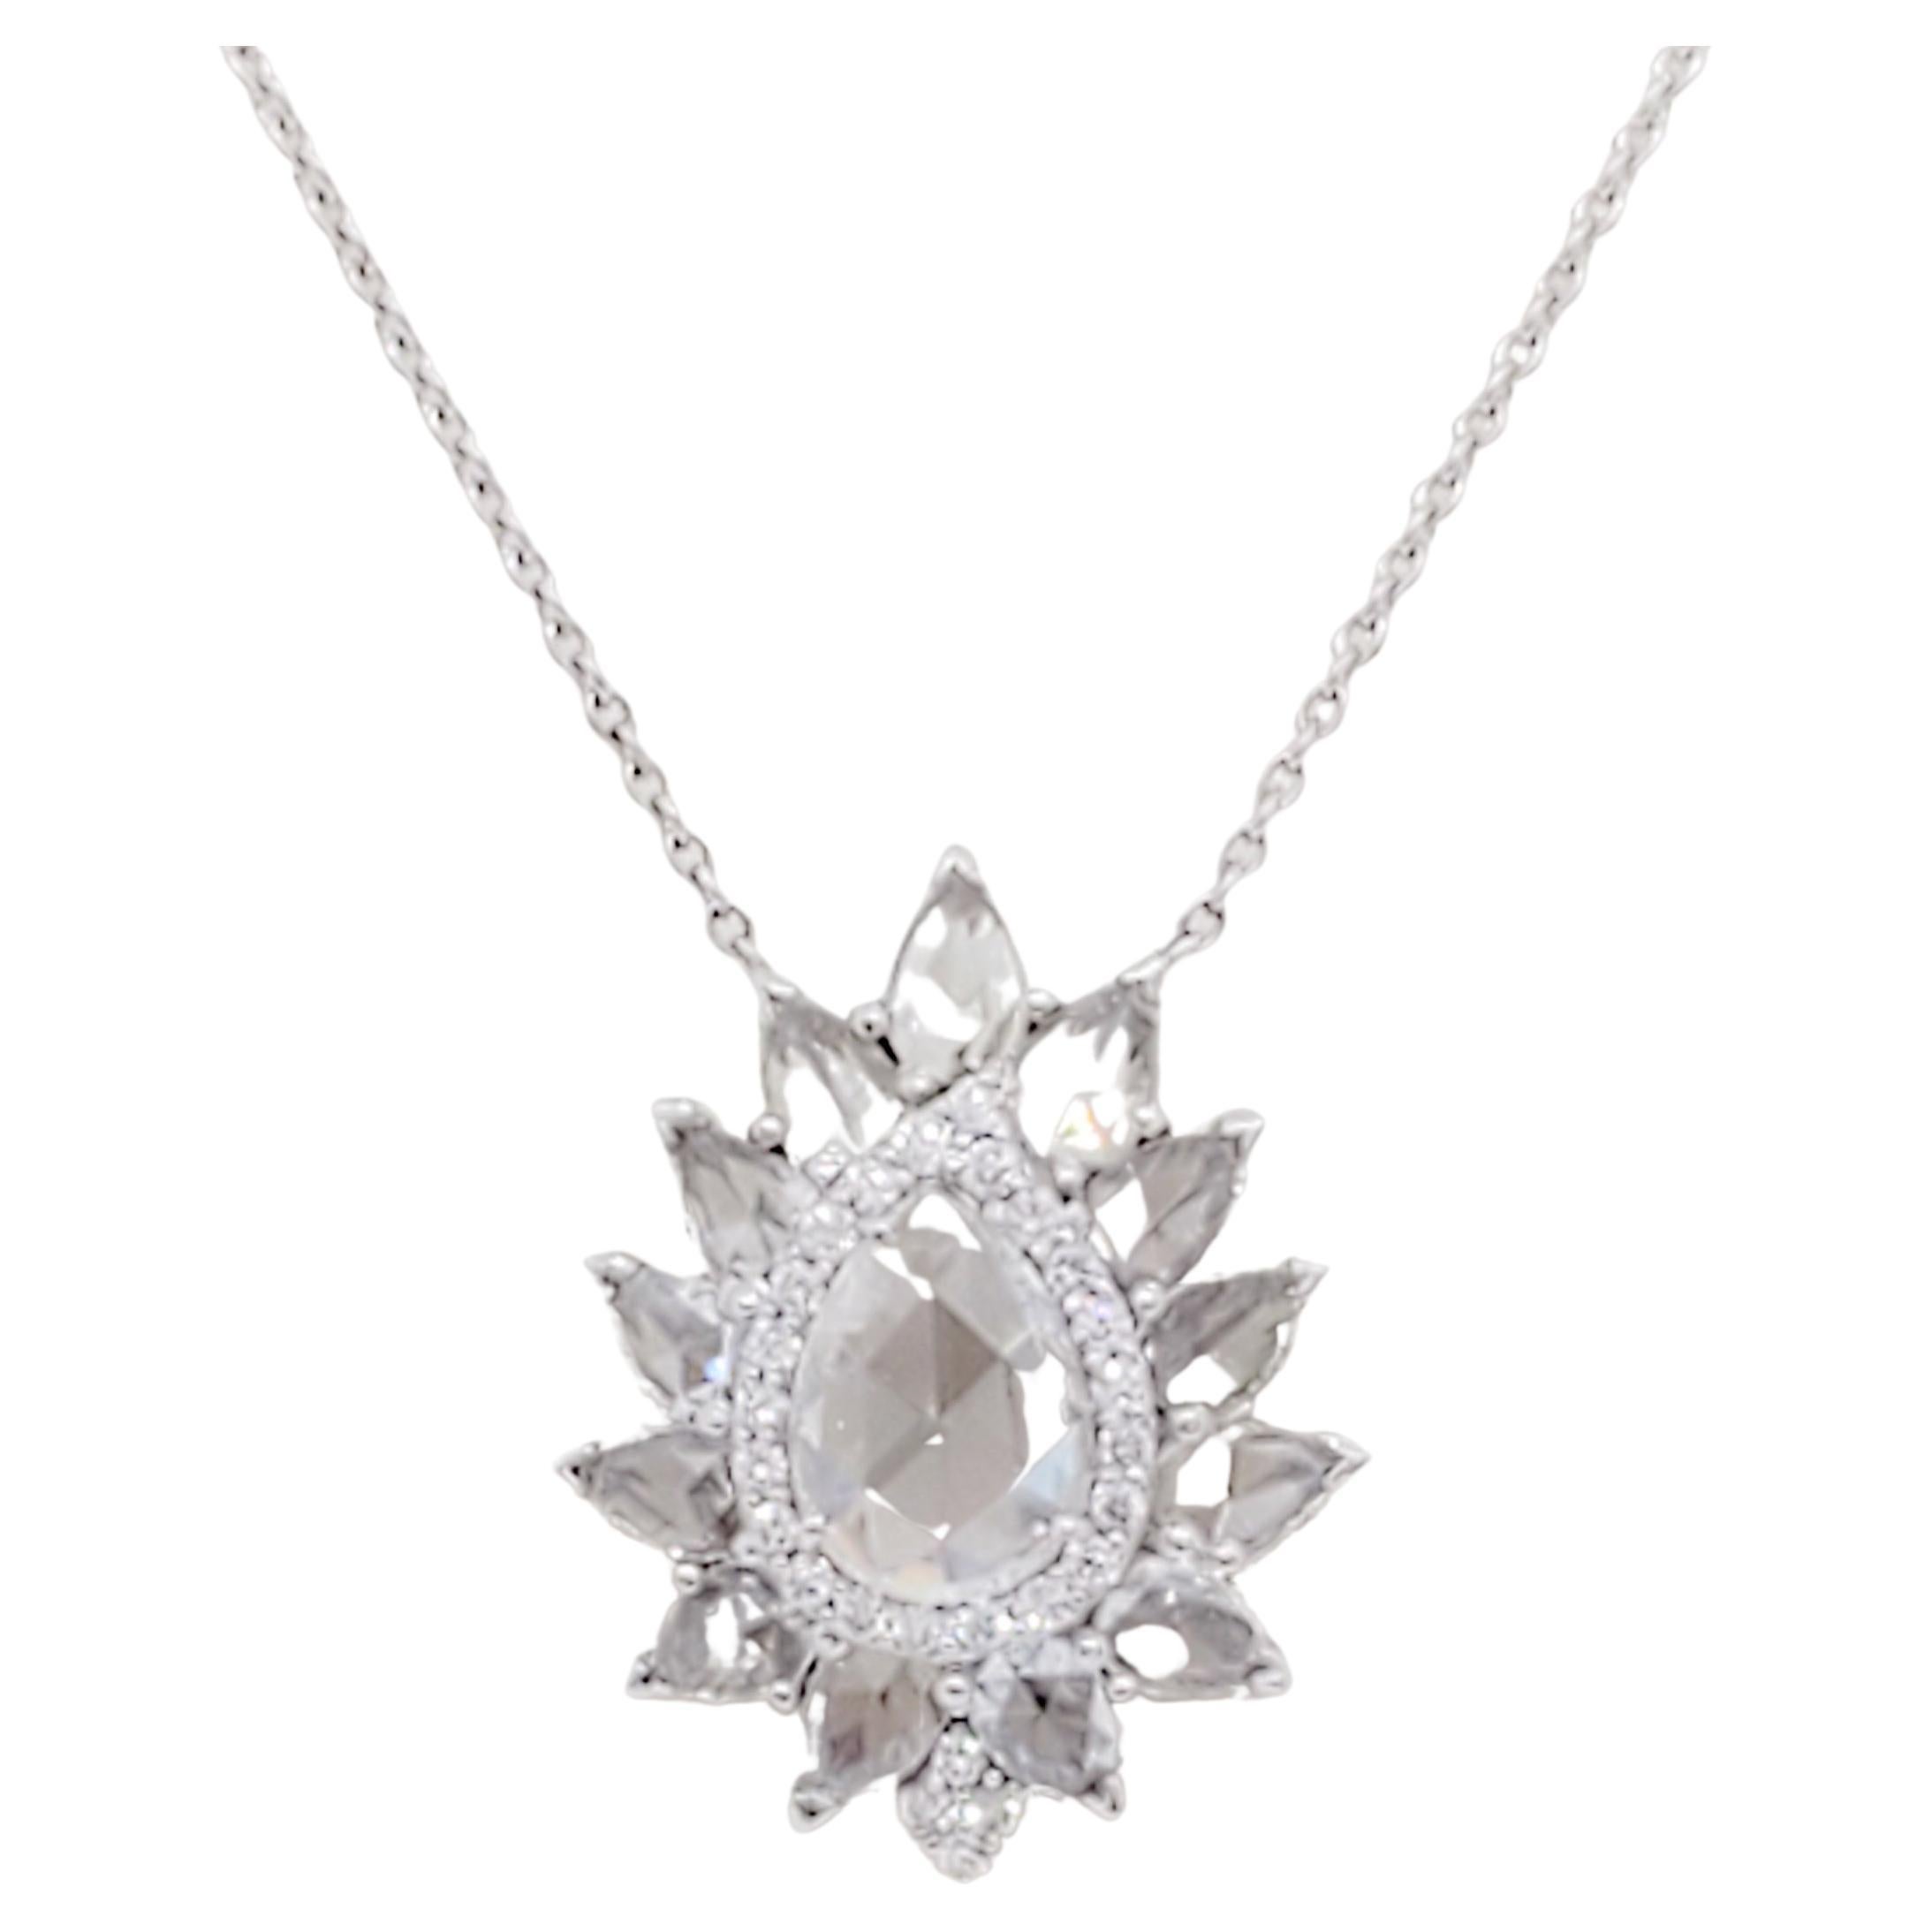 White Diamond Rose Cut Pendant Necklace in 18k White Gold